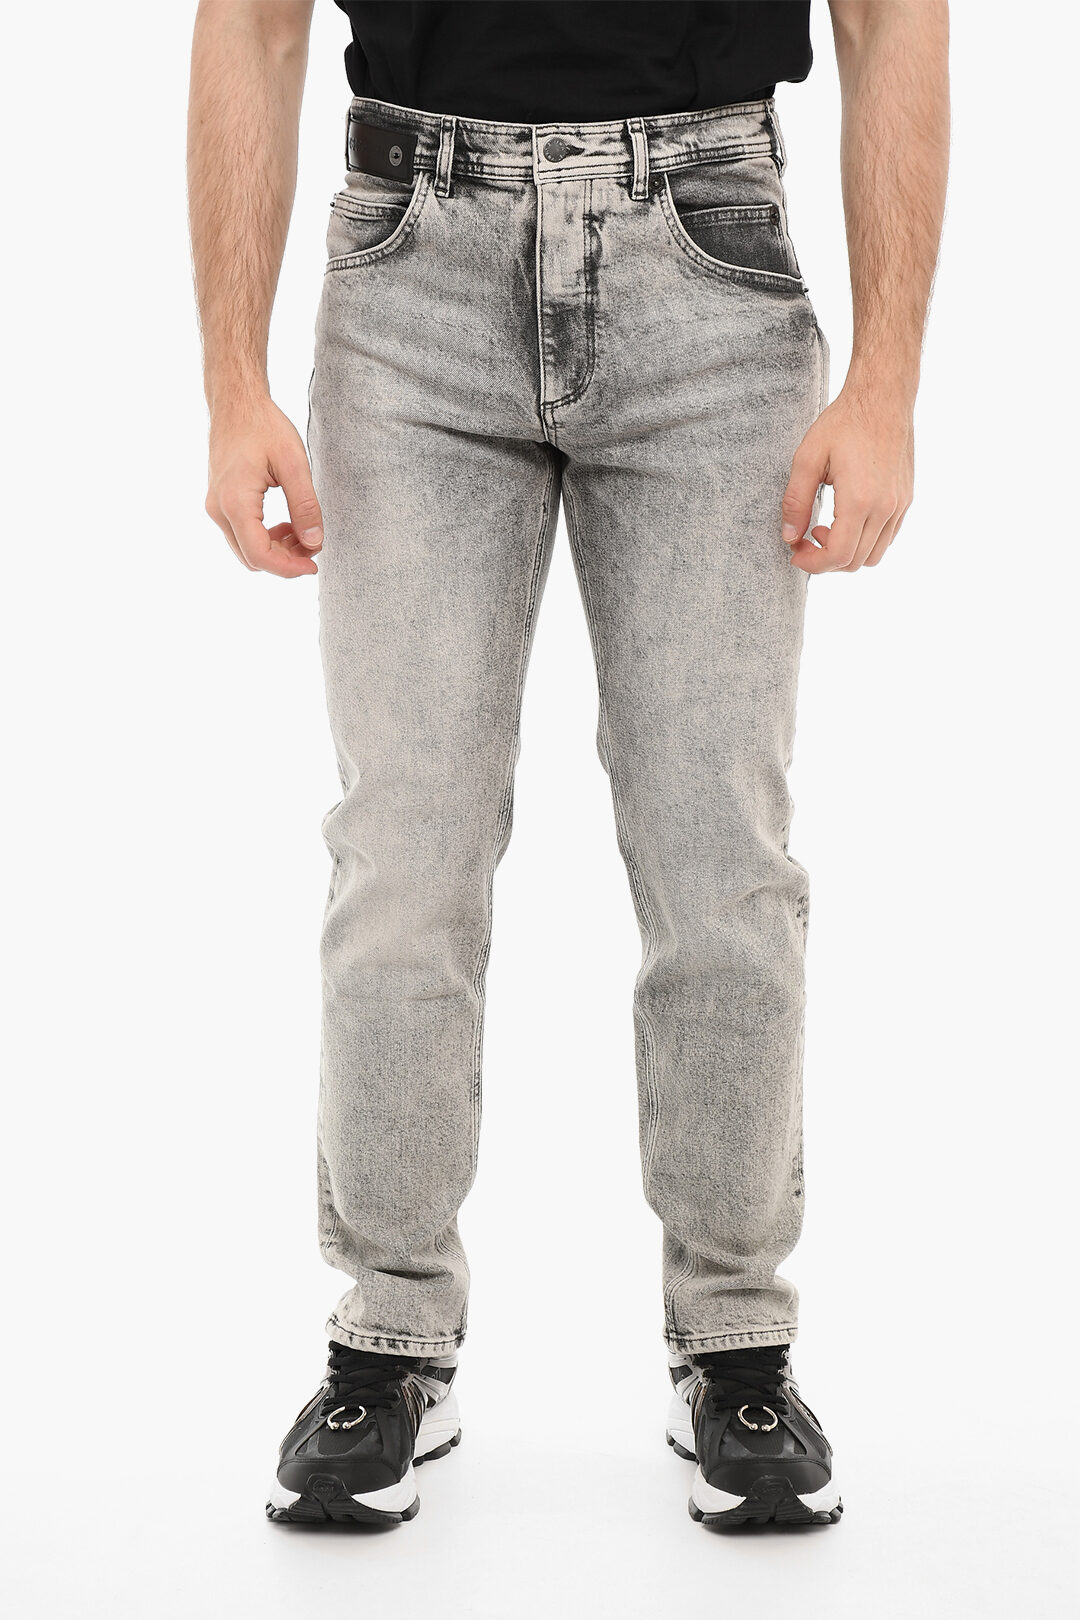 Guess Jeans Mens Rebel Gray Denim Straight Leg Button Fly Size 30 x 33 |  eBay